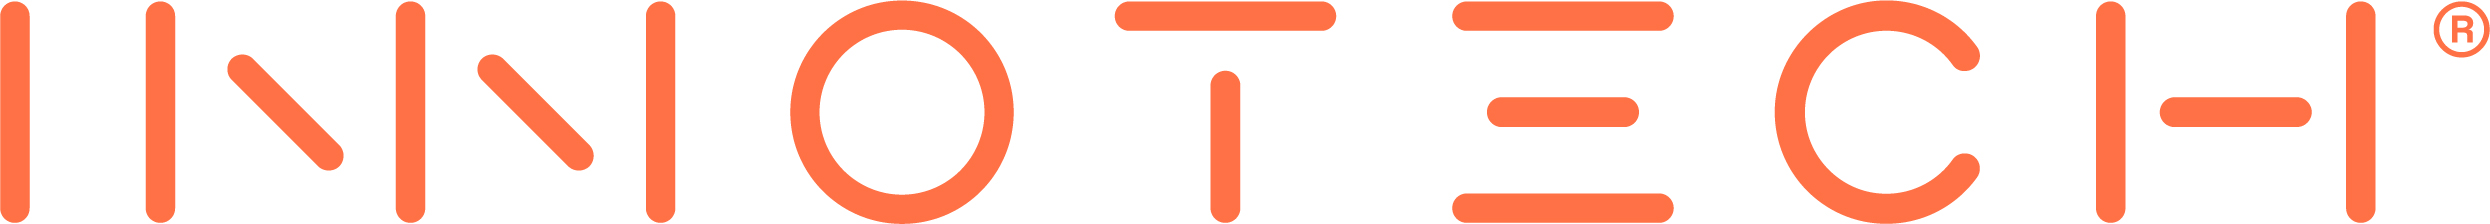 Logo Empresa 3